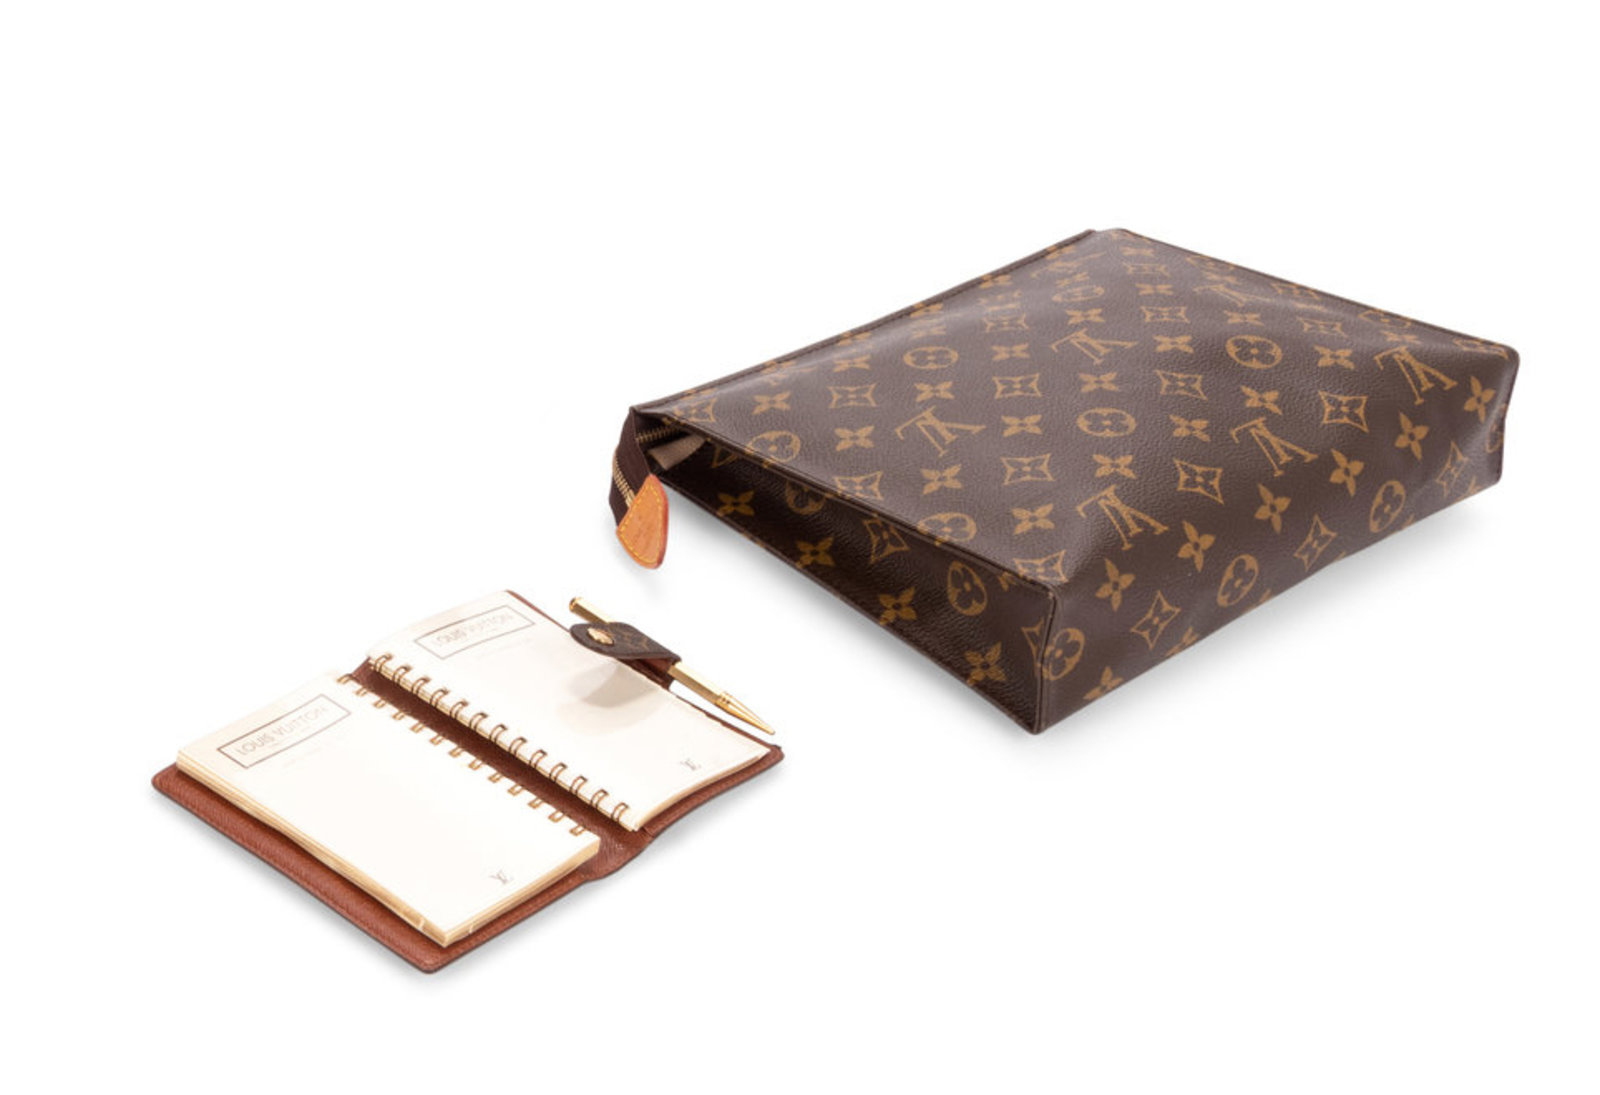 Louis Vuitton Drawstring Bag - 80 For Sale on 1stDibs